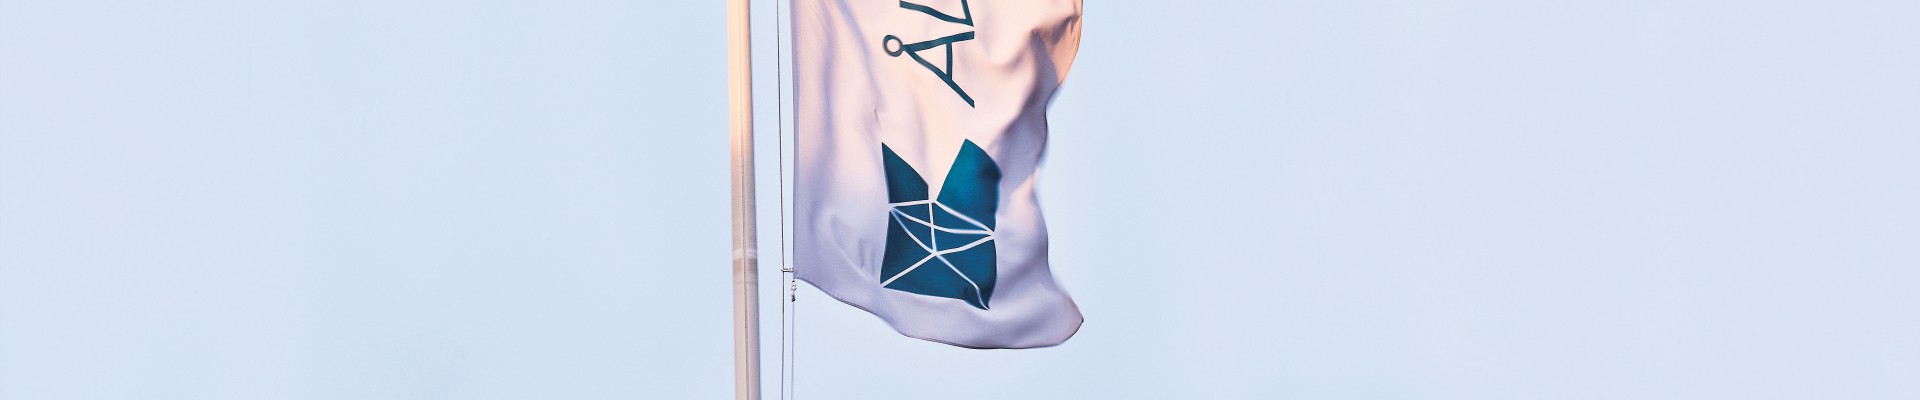 Flagga Sviby postterminal